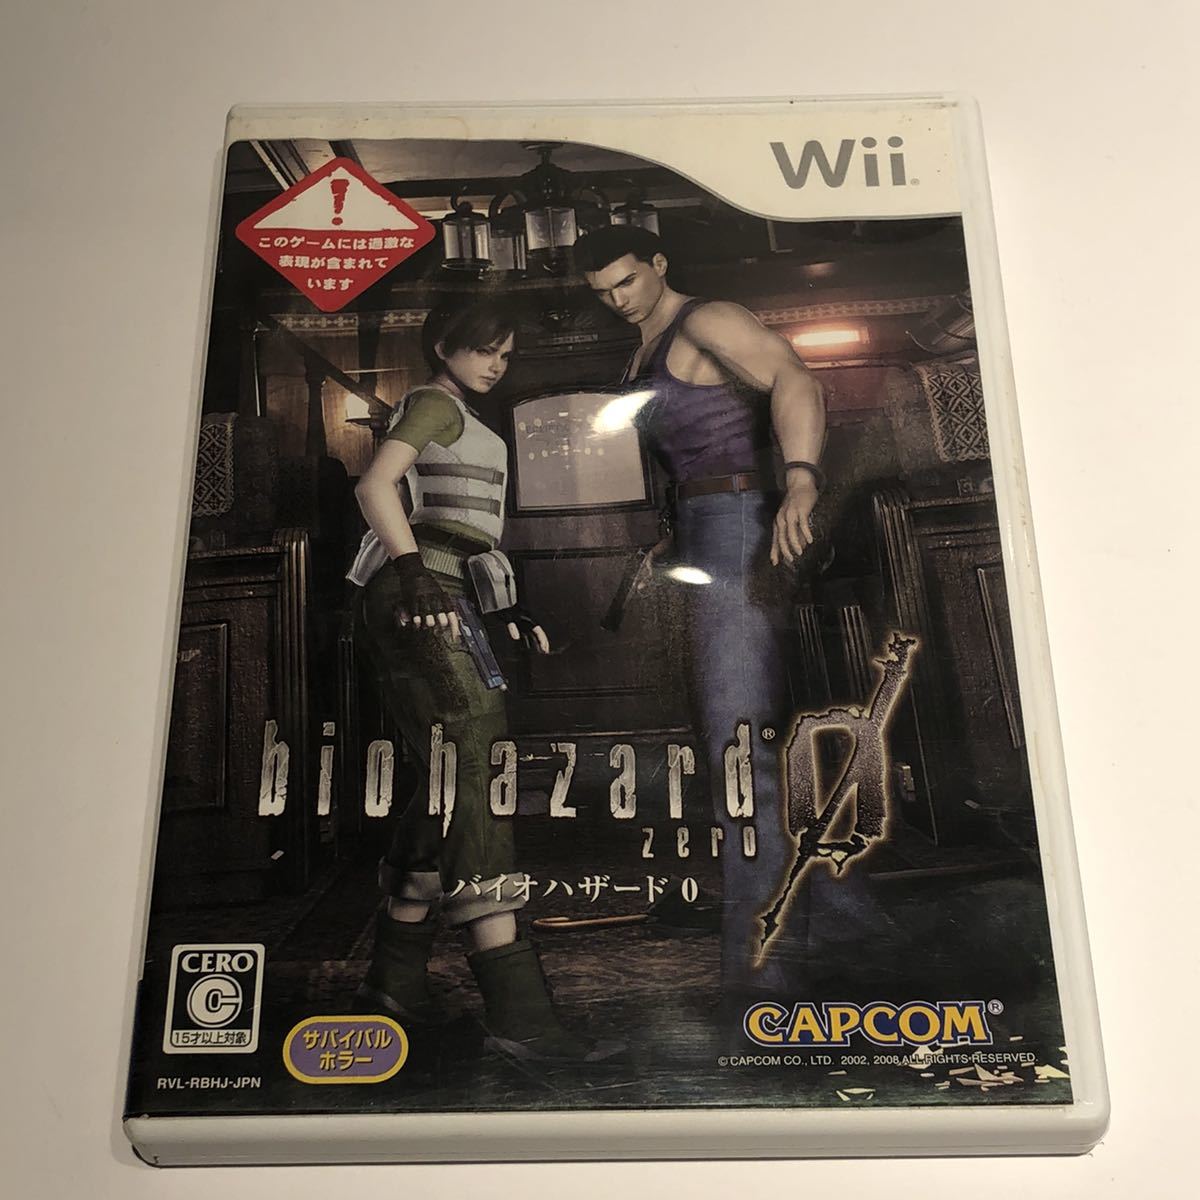 Wii バイオハザード0 Biohazard Zero Wiki Ga Com Br